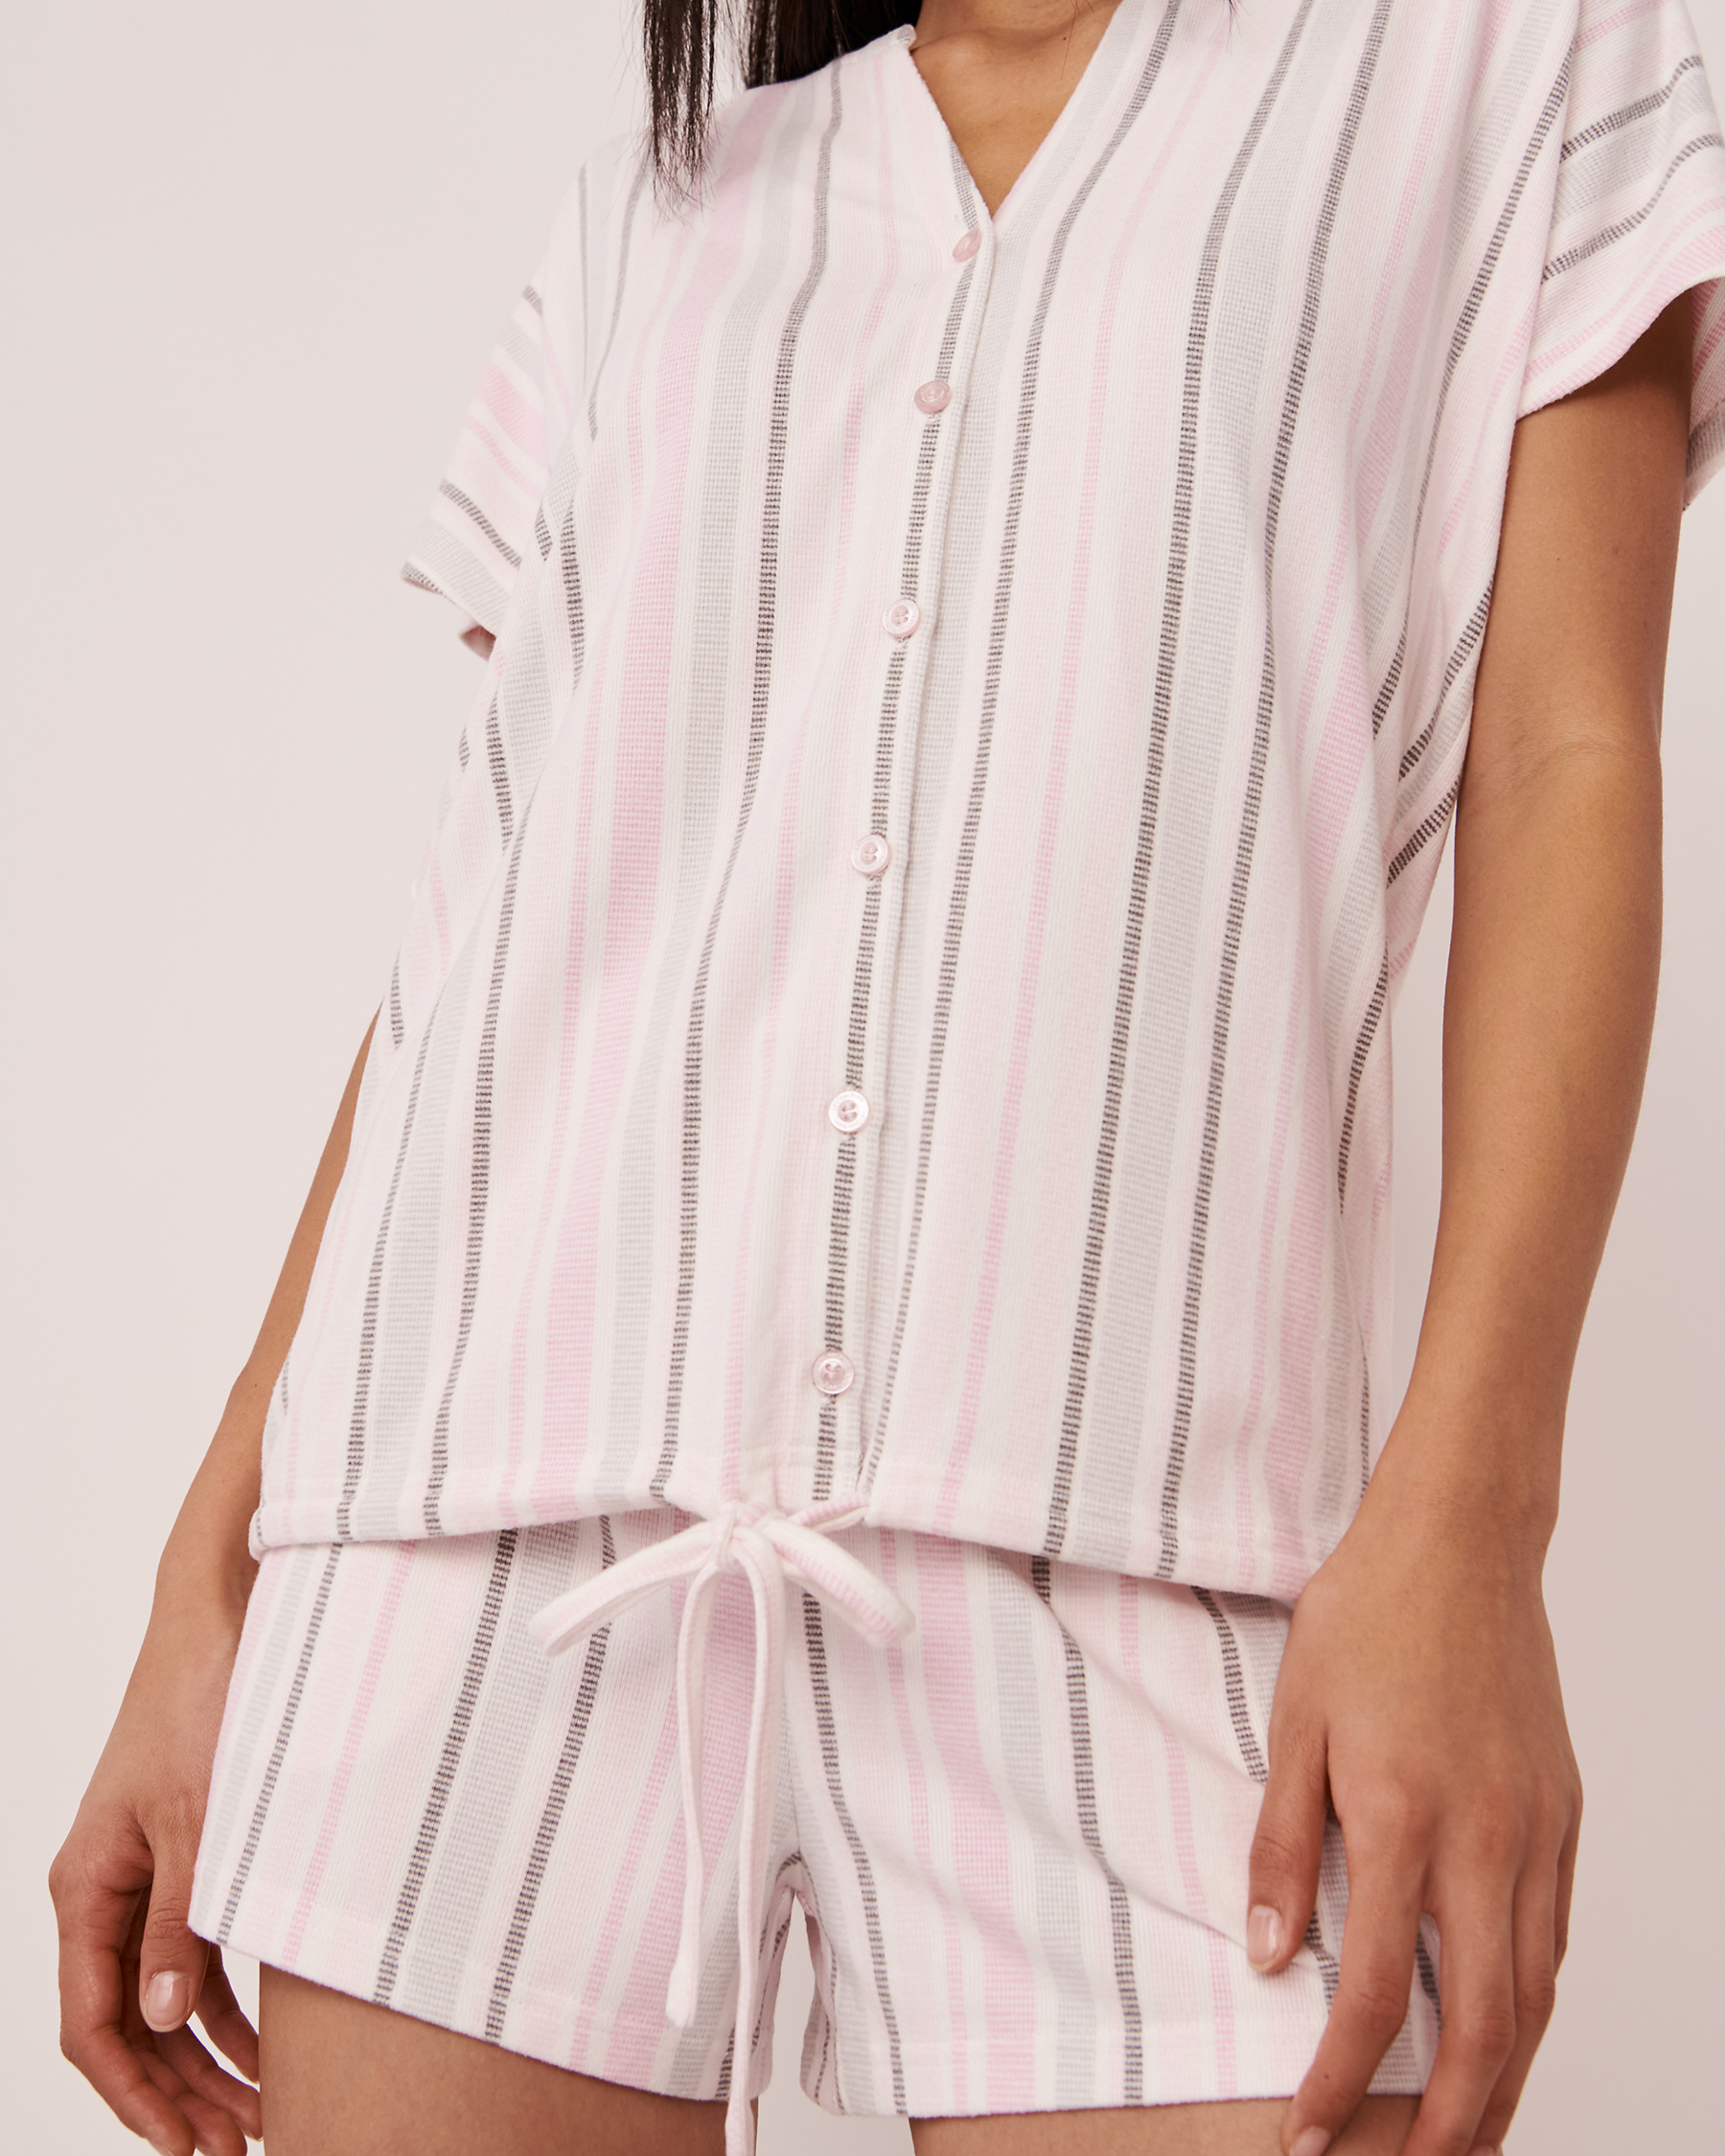 LA VIE EN ROSE Recycled Fibers Short Sleeeve Button-down Shirt Ballerina pink stripes 40100393 - View1